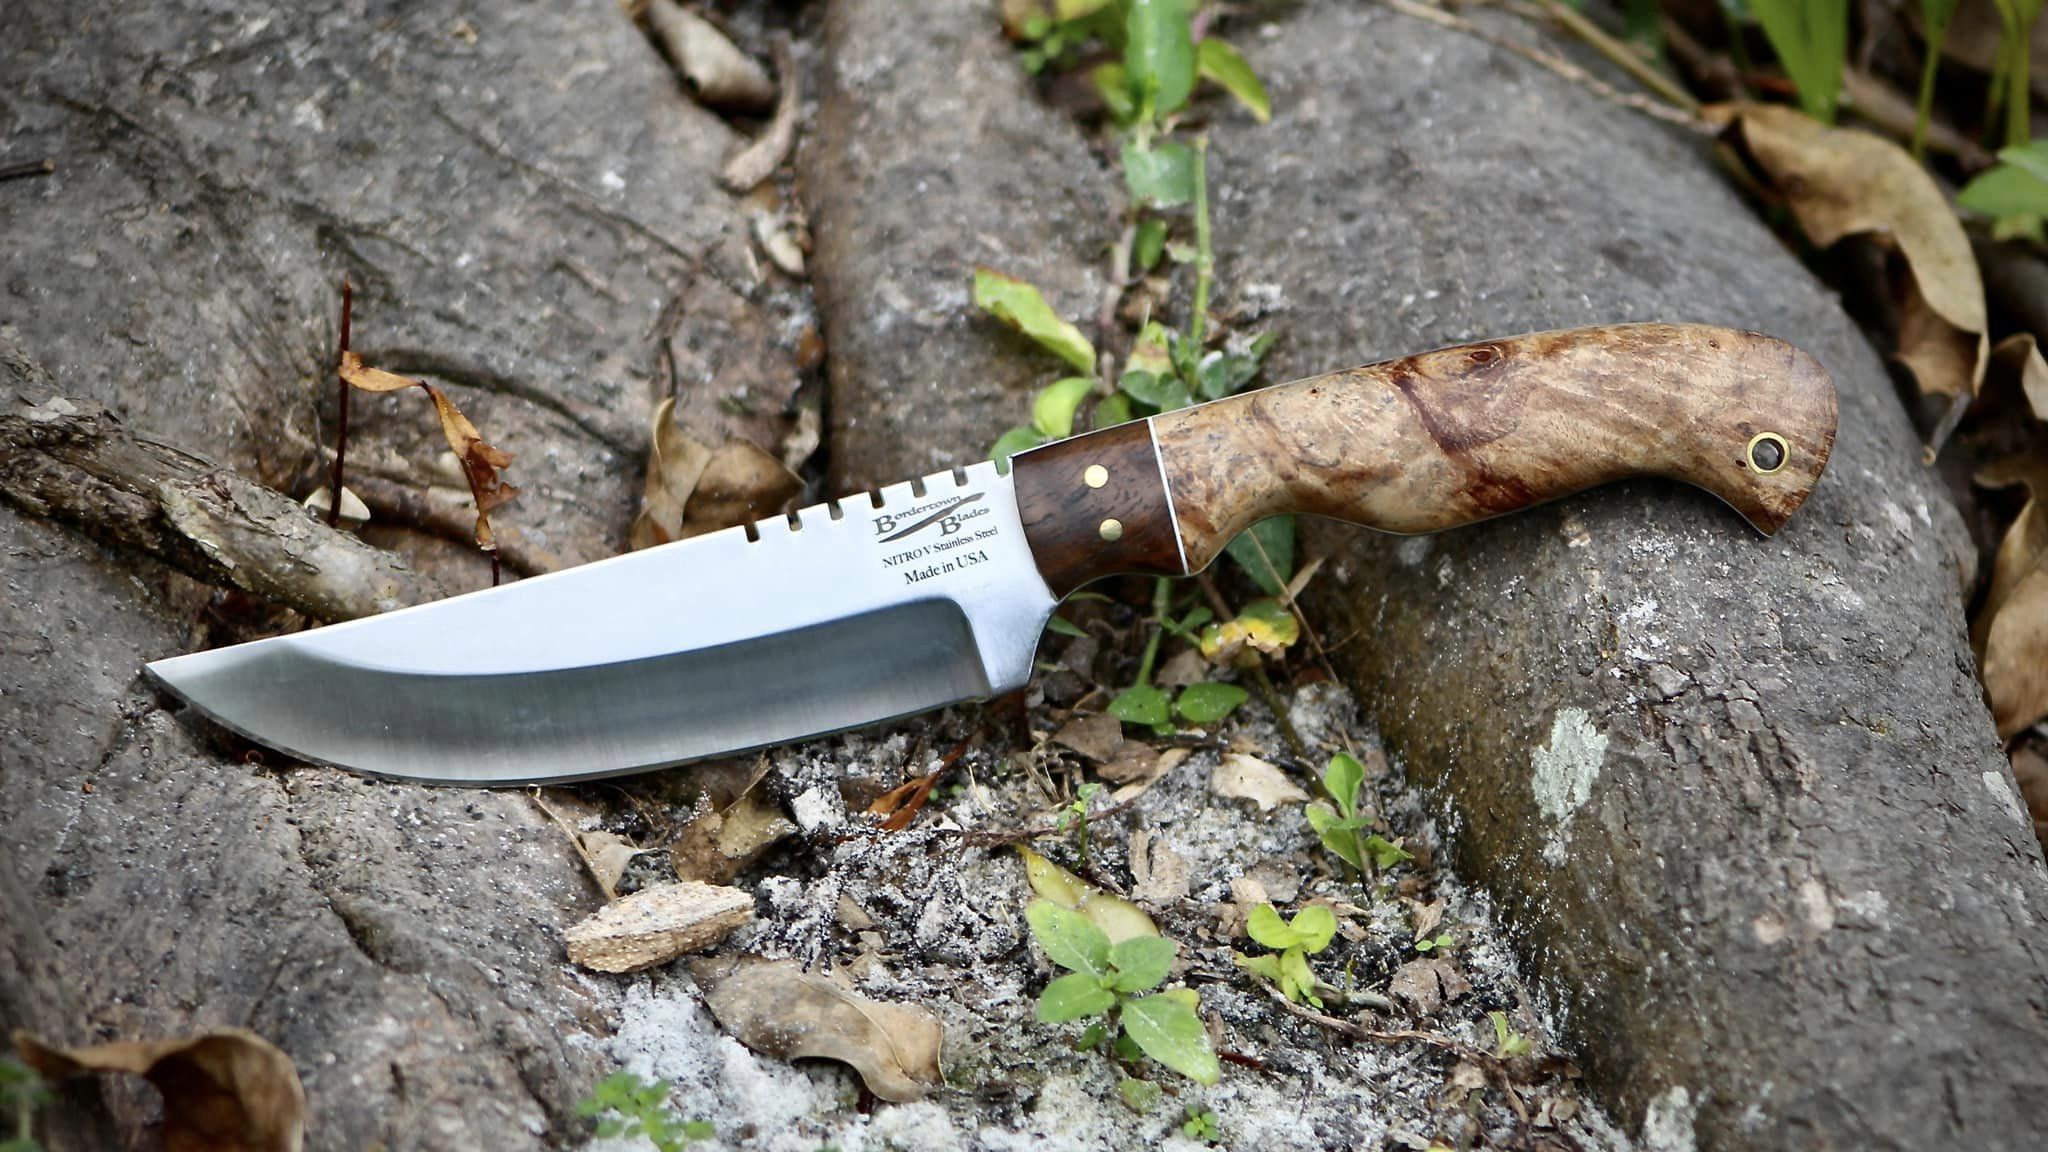 Winchester Burl Wooden Handled Gut Hook Skinning Knife